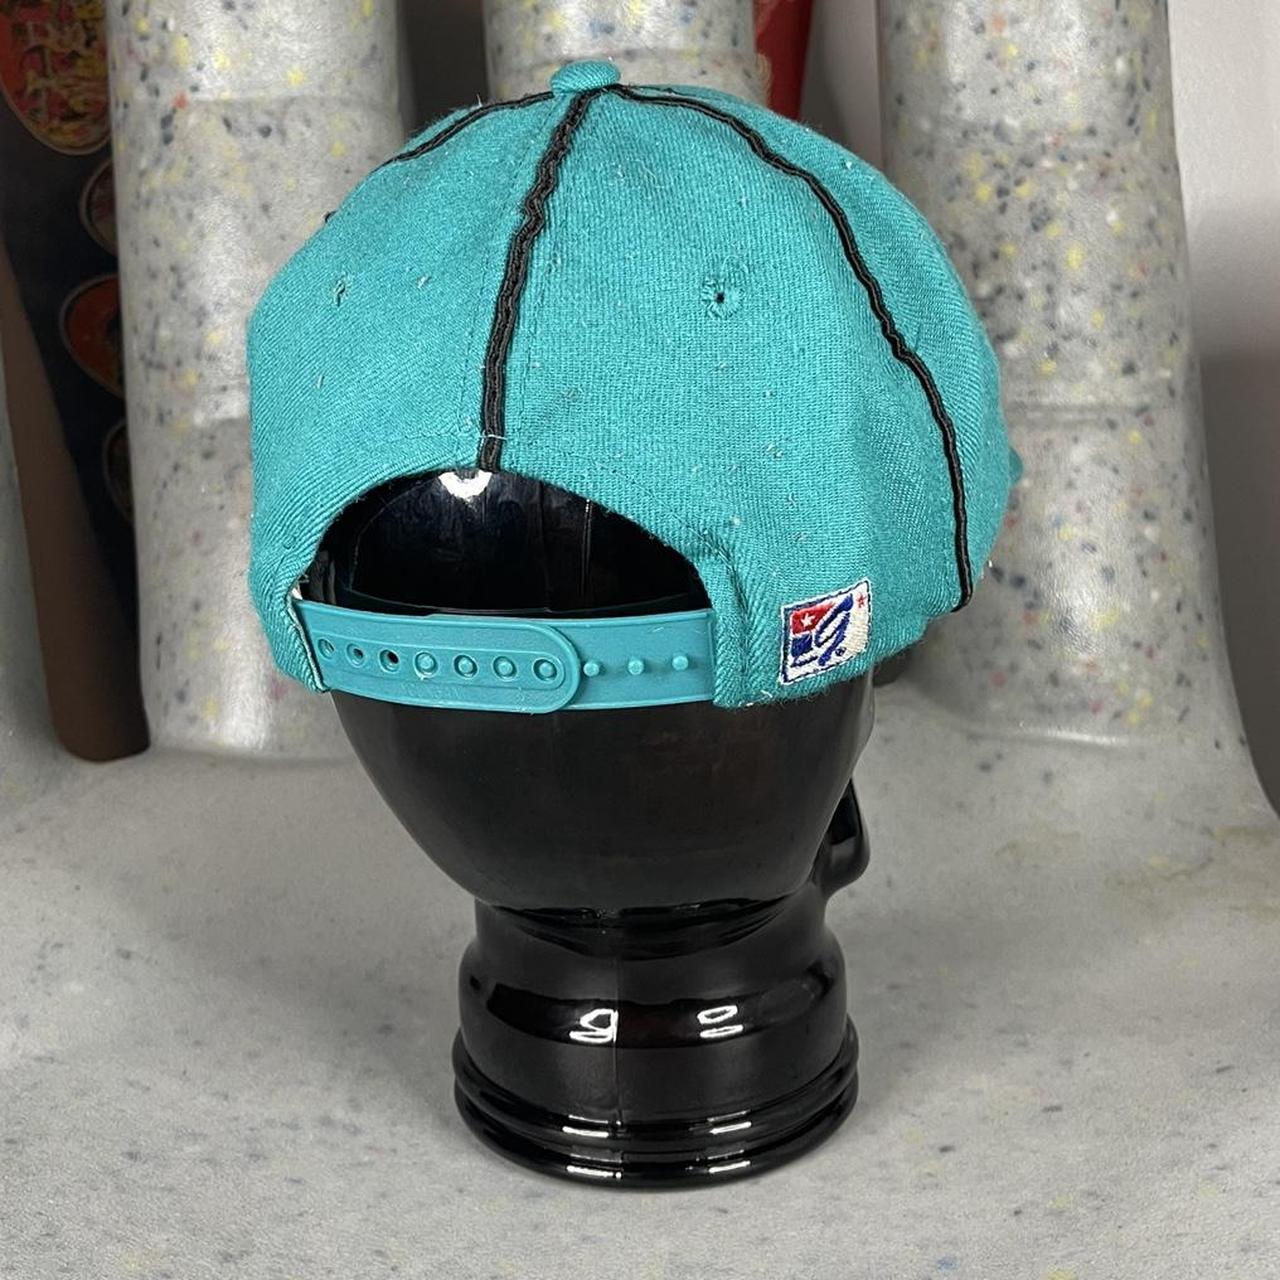 Product Image 2 - 90s Florida Marlins Hat VINTAGE

Size/fitting: